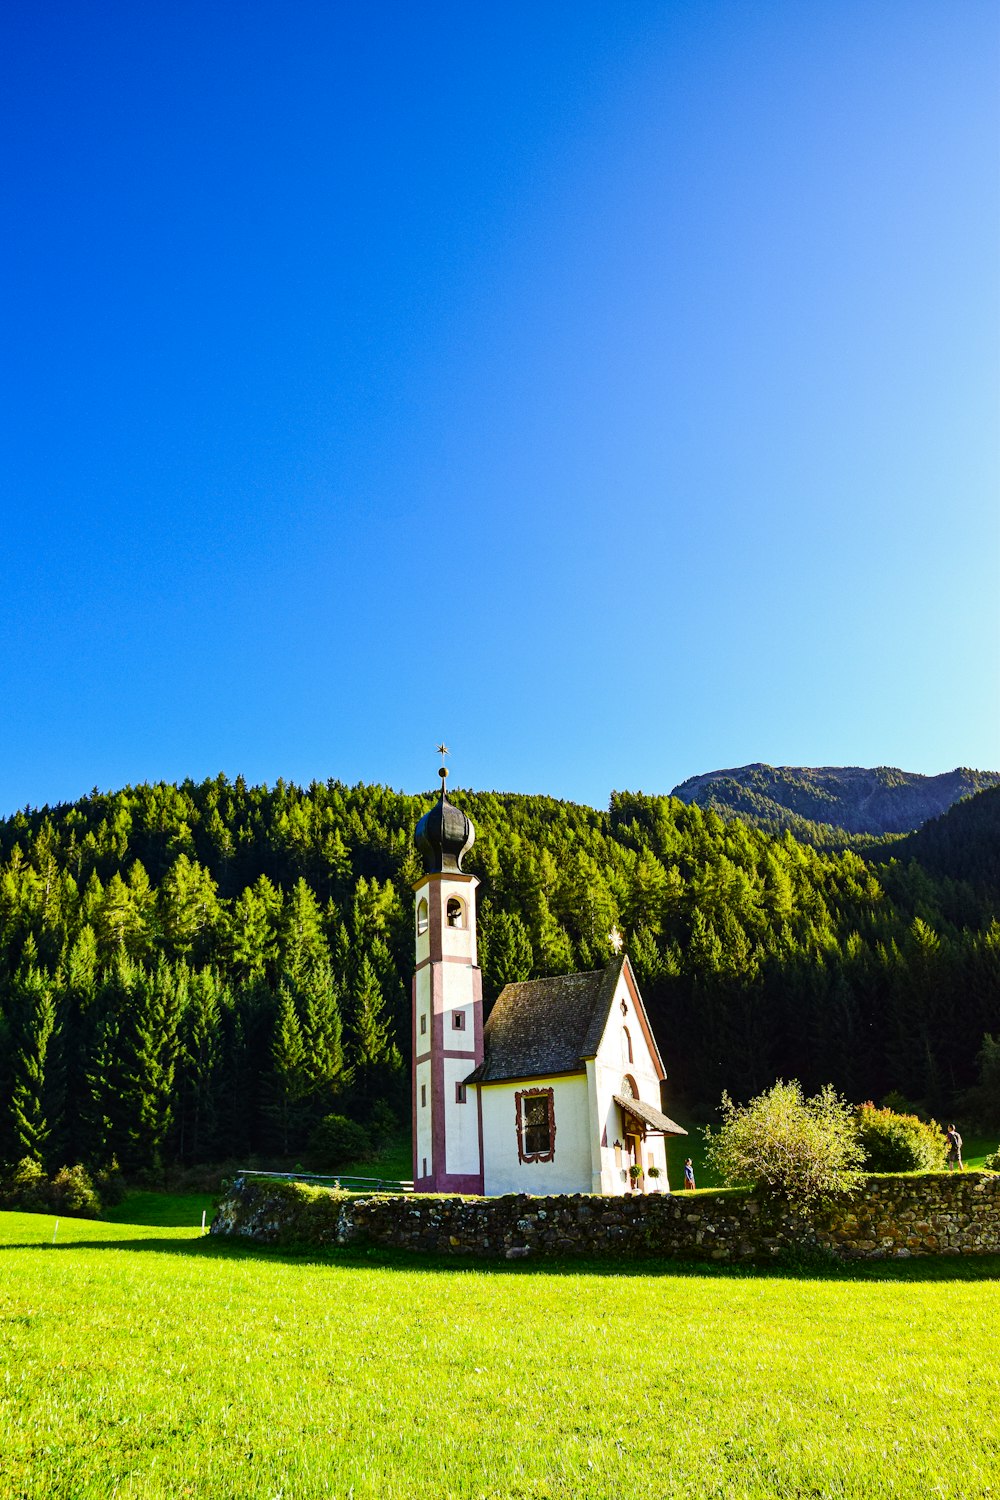 a small church in a green field